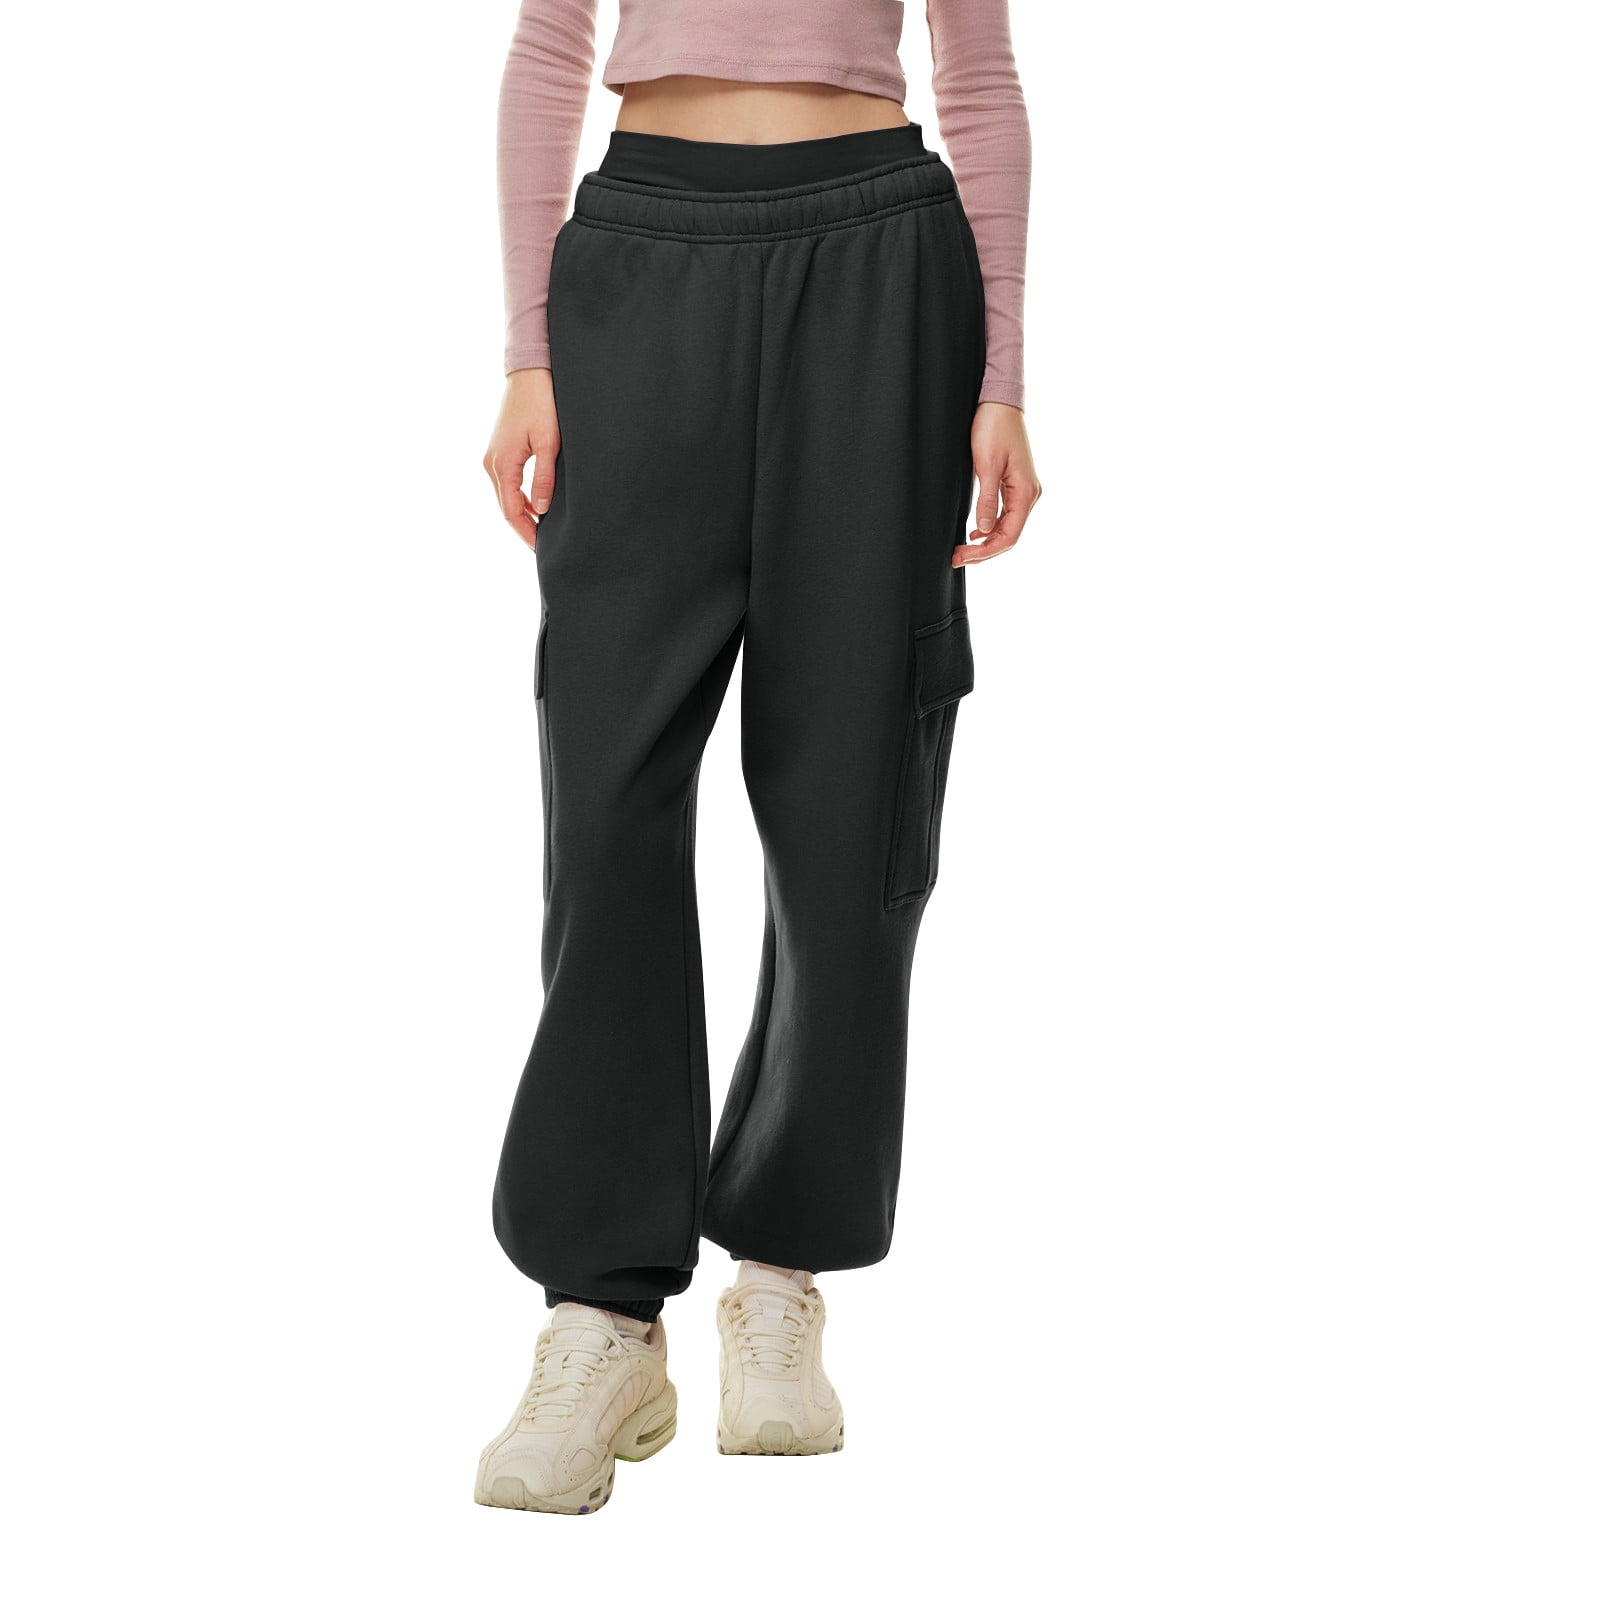 Knosfe Cute Sweatpants for Teen Girls Fleece Lined Straight Leg